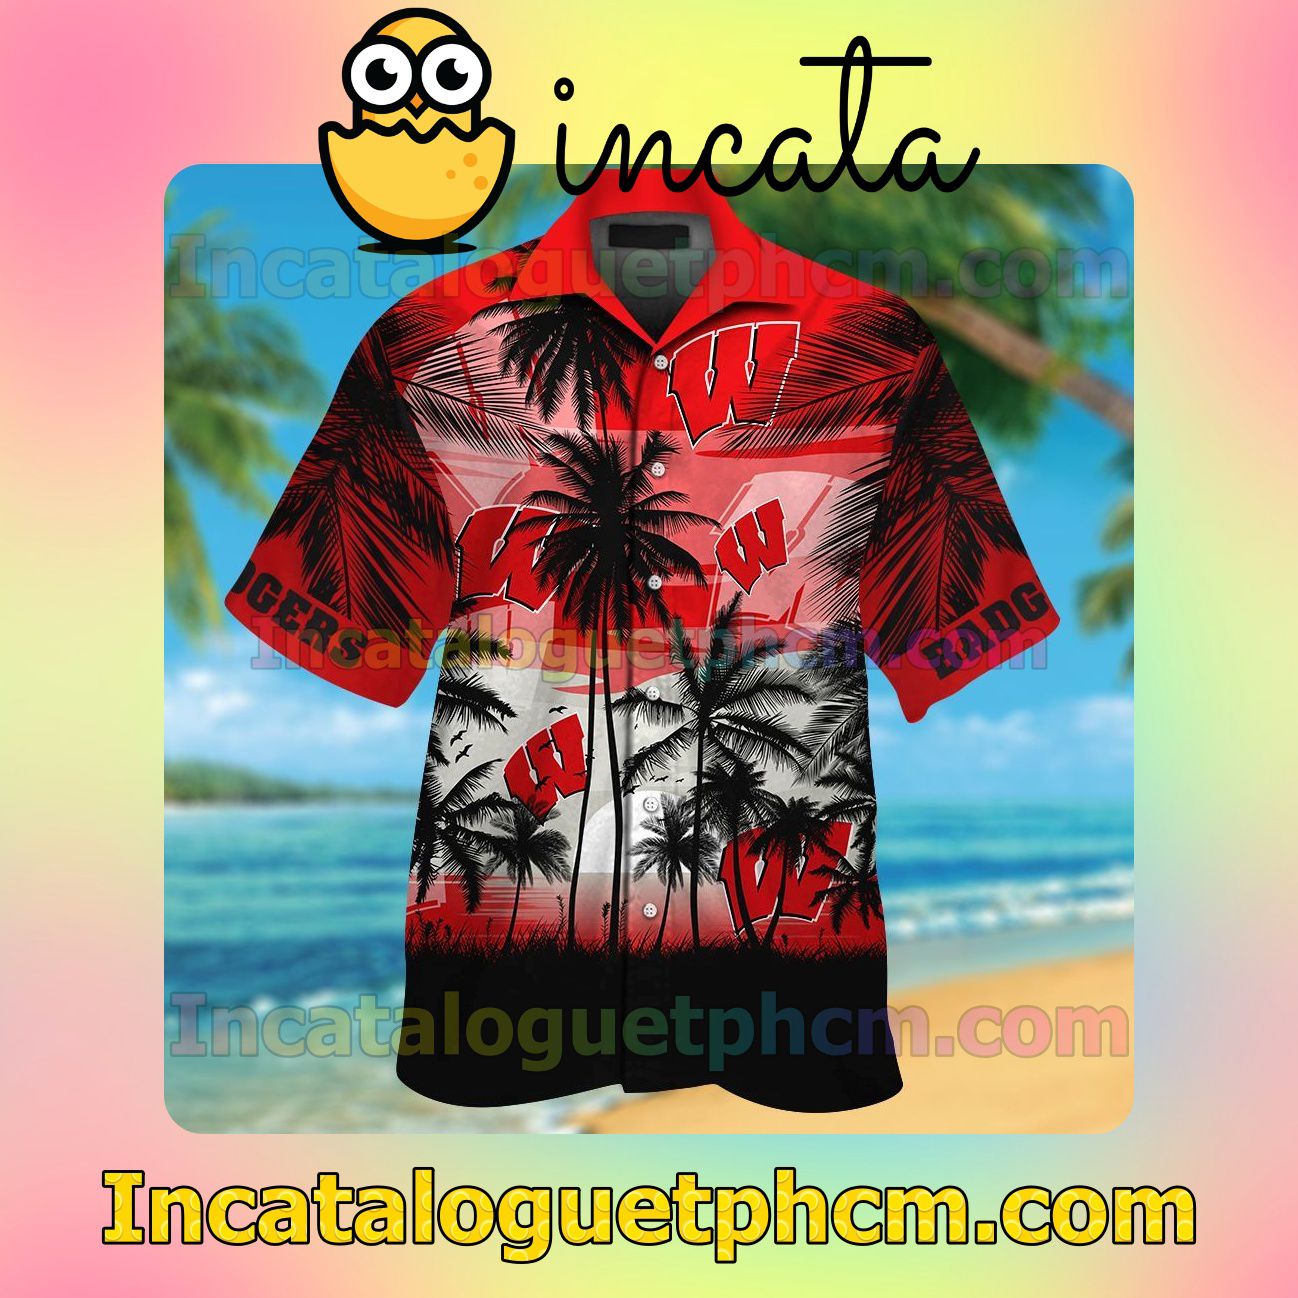 Wisconsin Badgers Tropical Beach Vacation Shirt, Swim Shorts